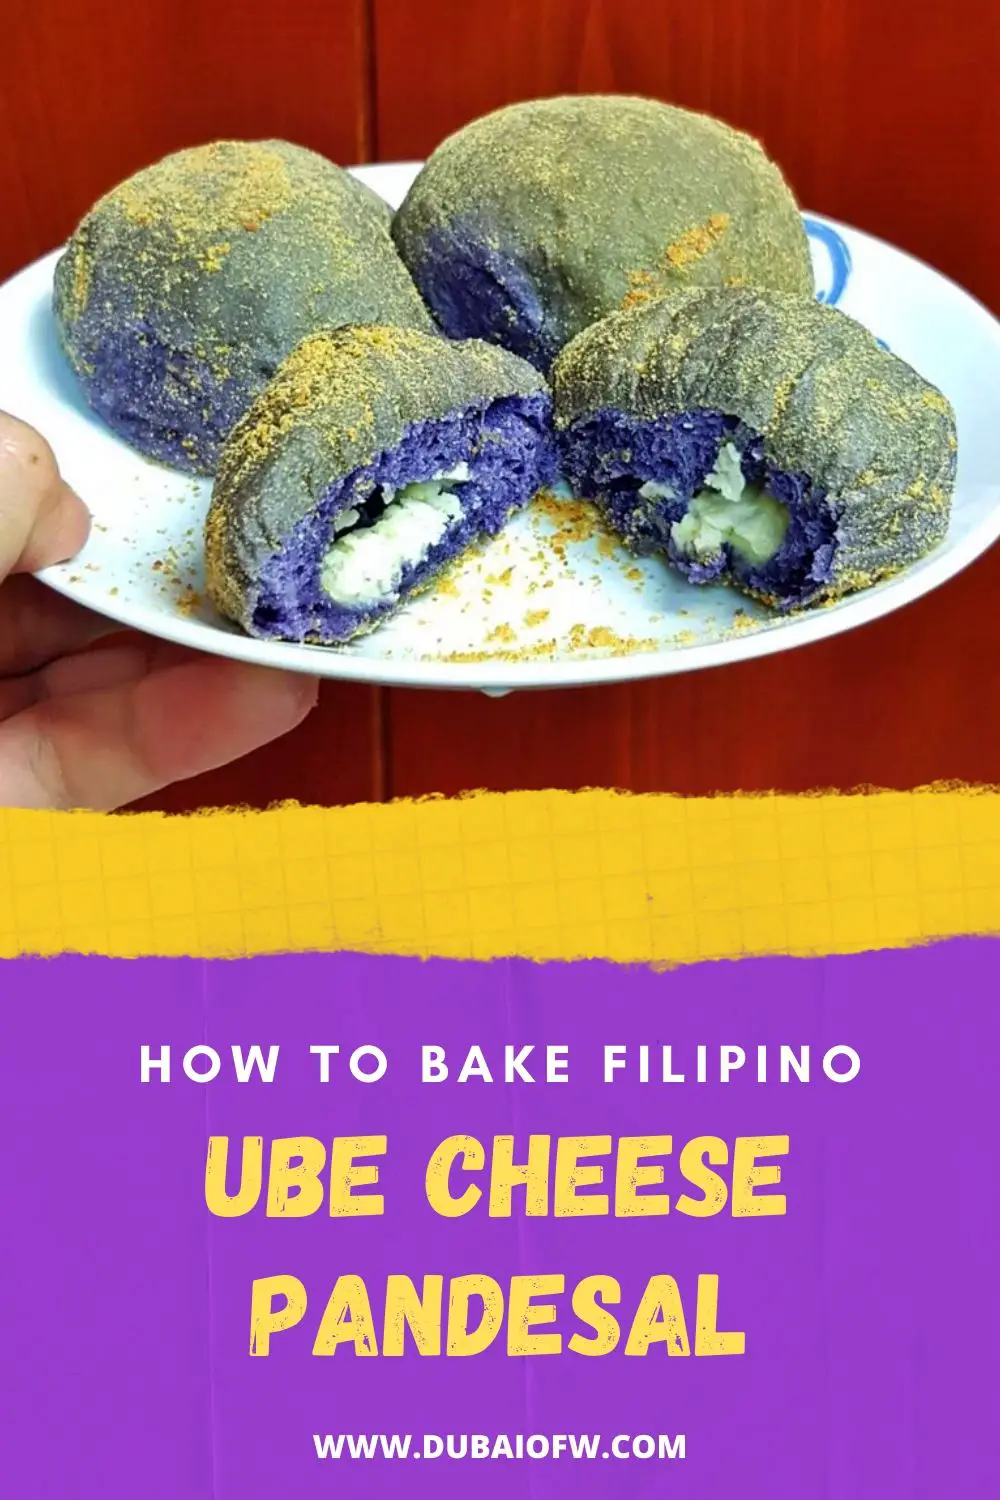 ube cheese pandesal recipe how to bake